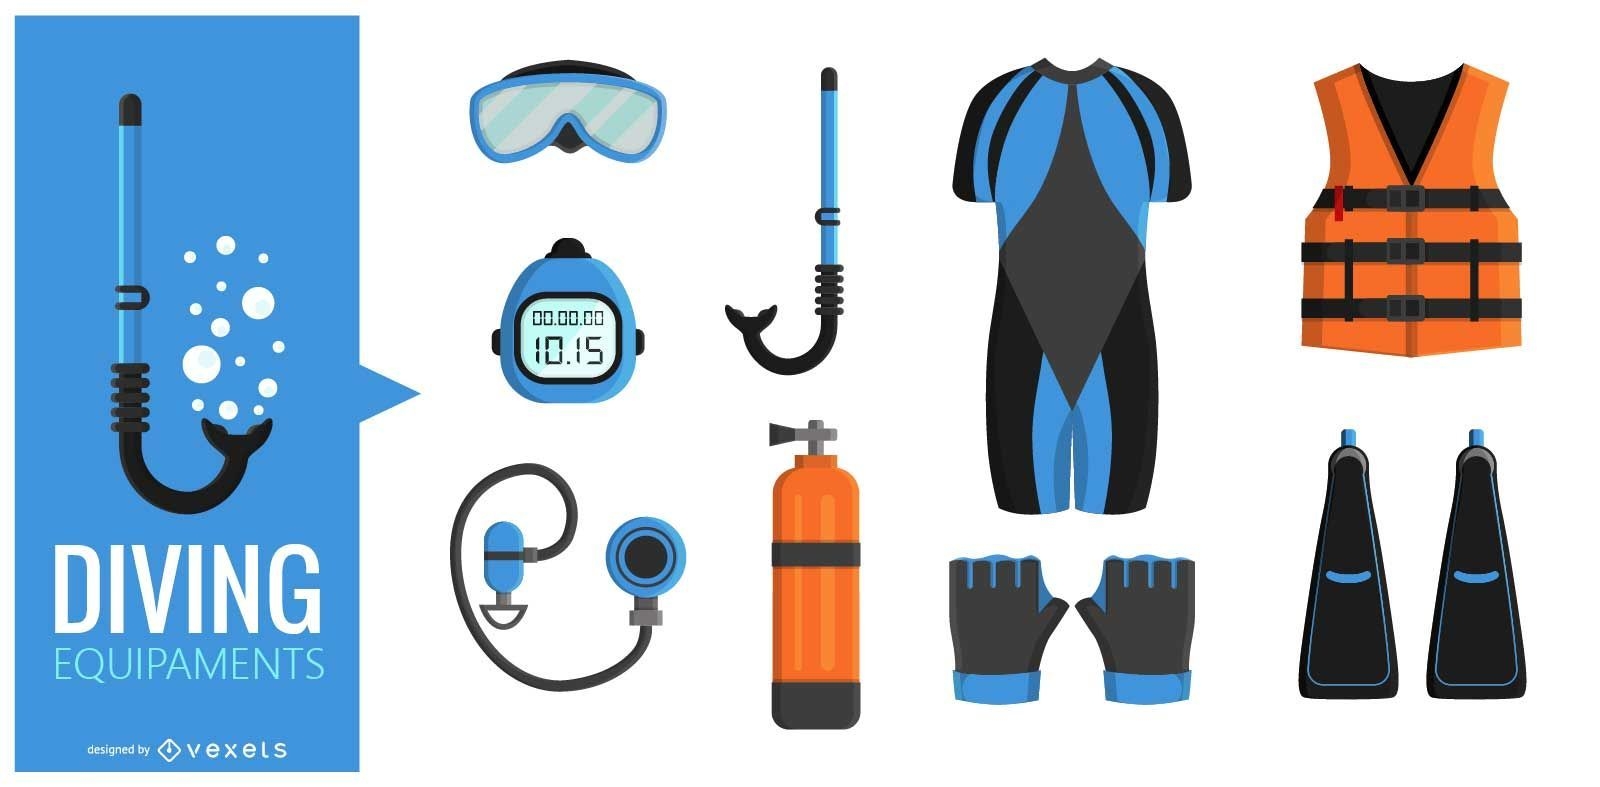 Diving equipment illustration set